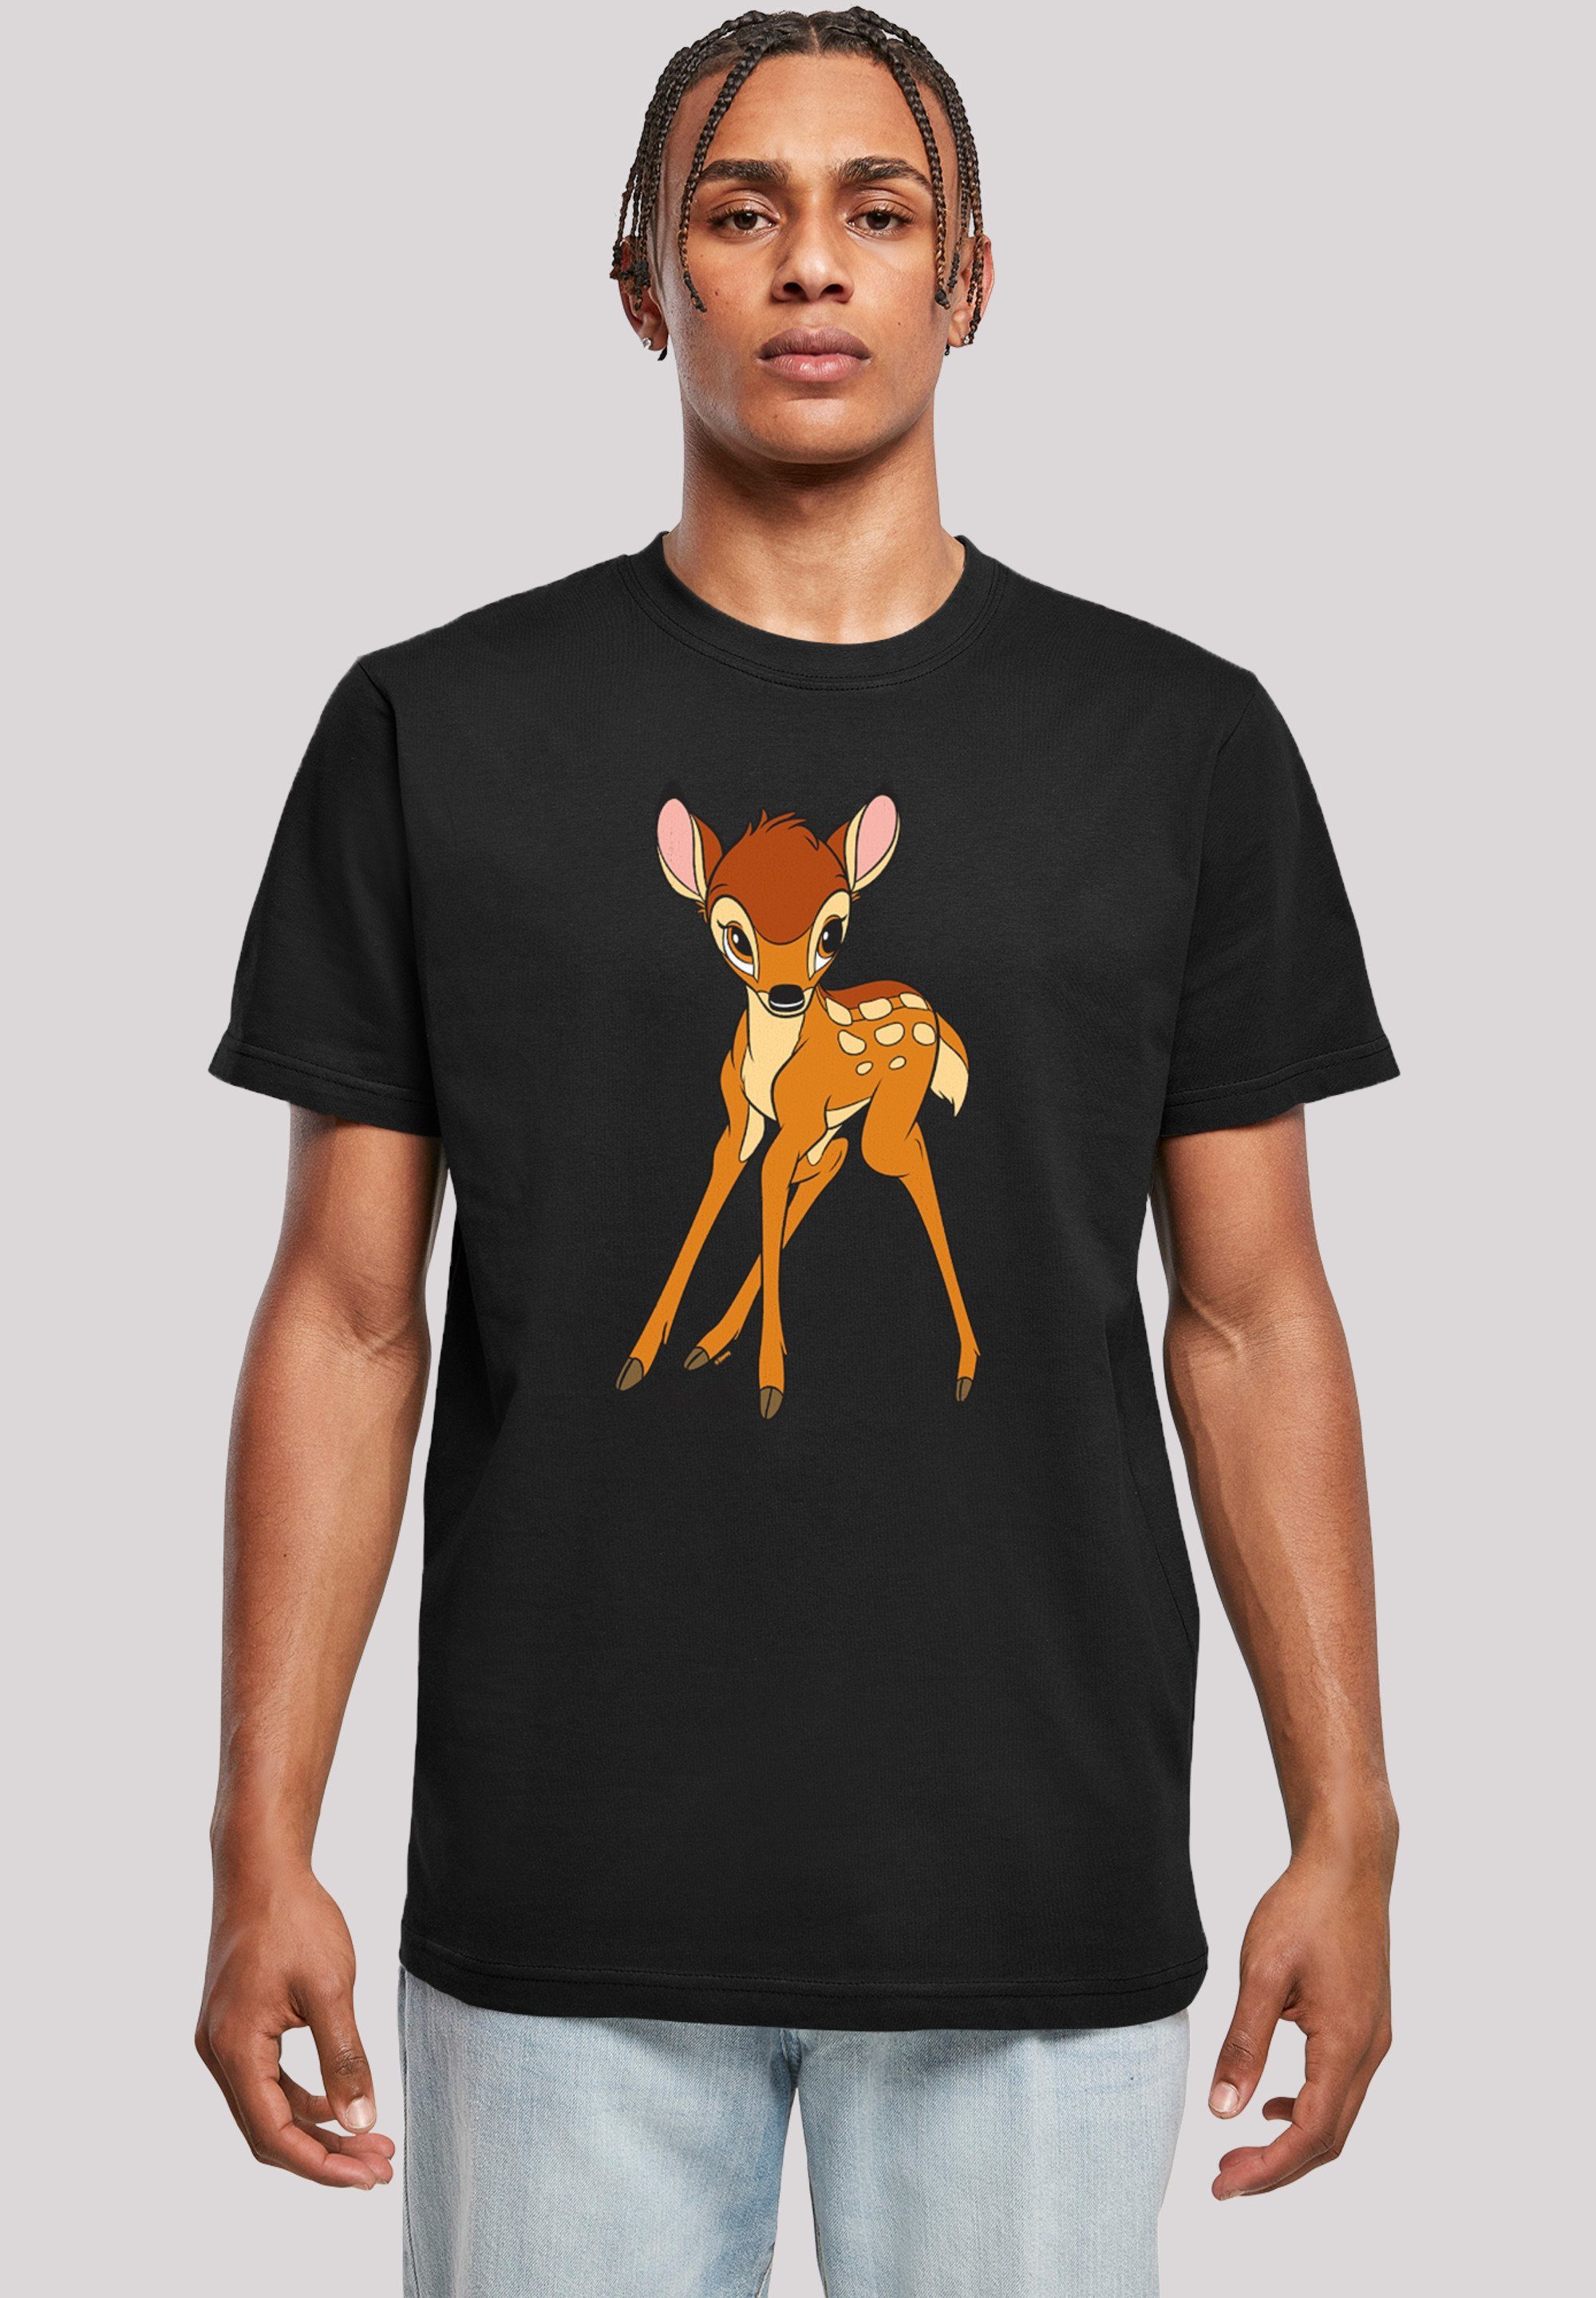 T-Shirt Classic Herren,Premium Bambi Disney schwarz Merch,Regular-Fit,Basic,Bedruckt F4NT4STIC